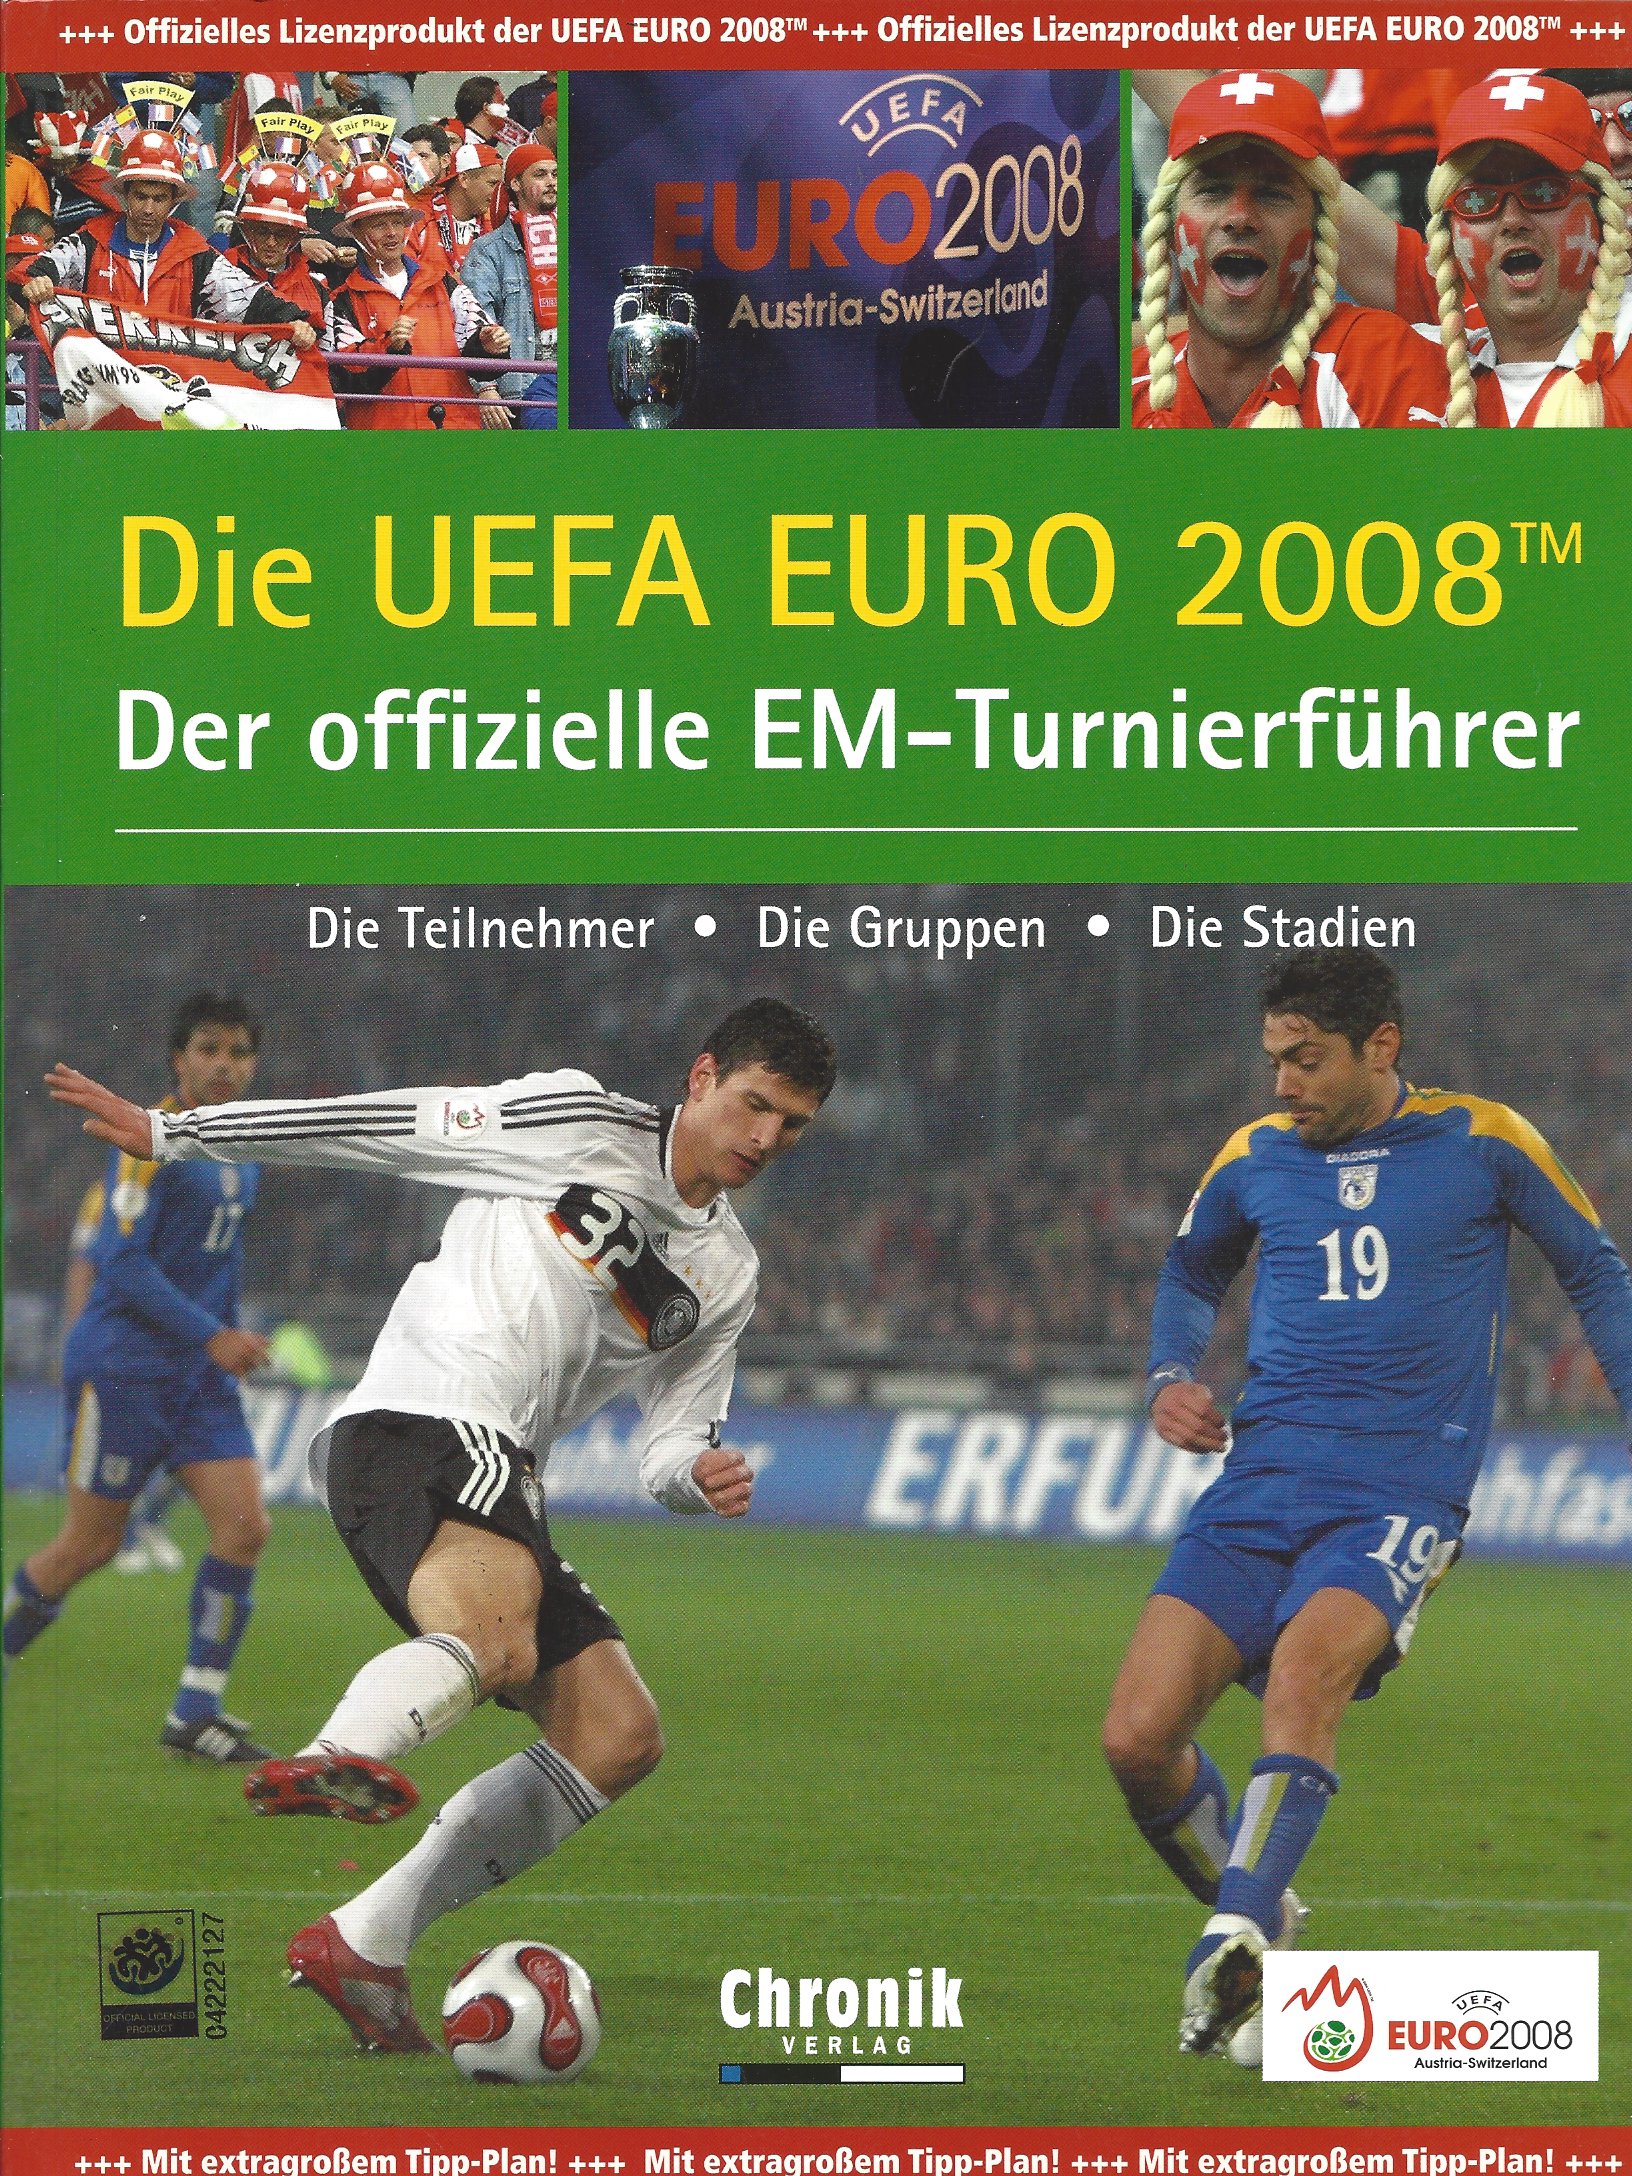 uefa euro 2008 downloads